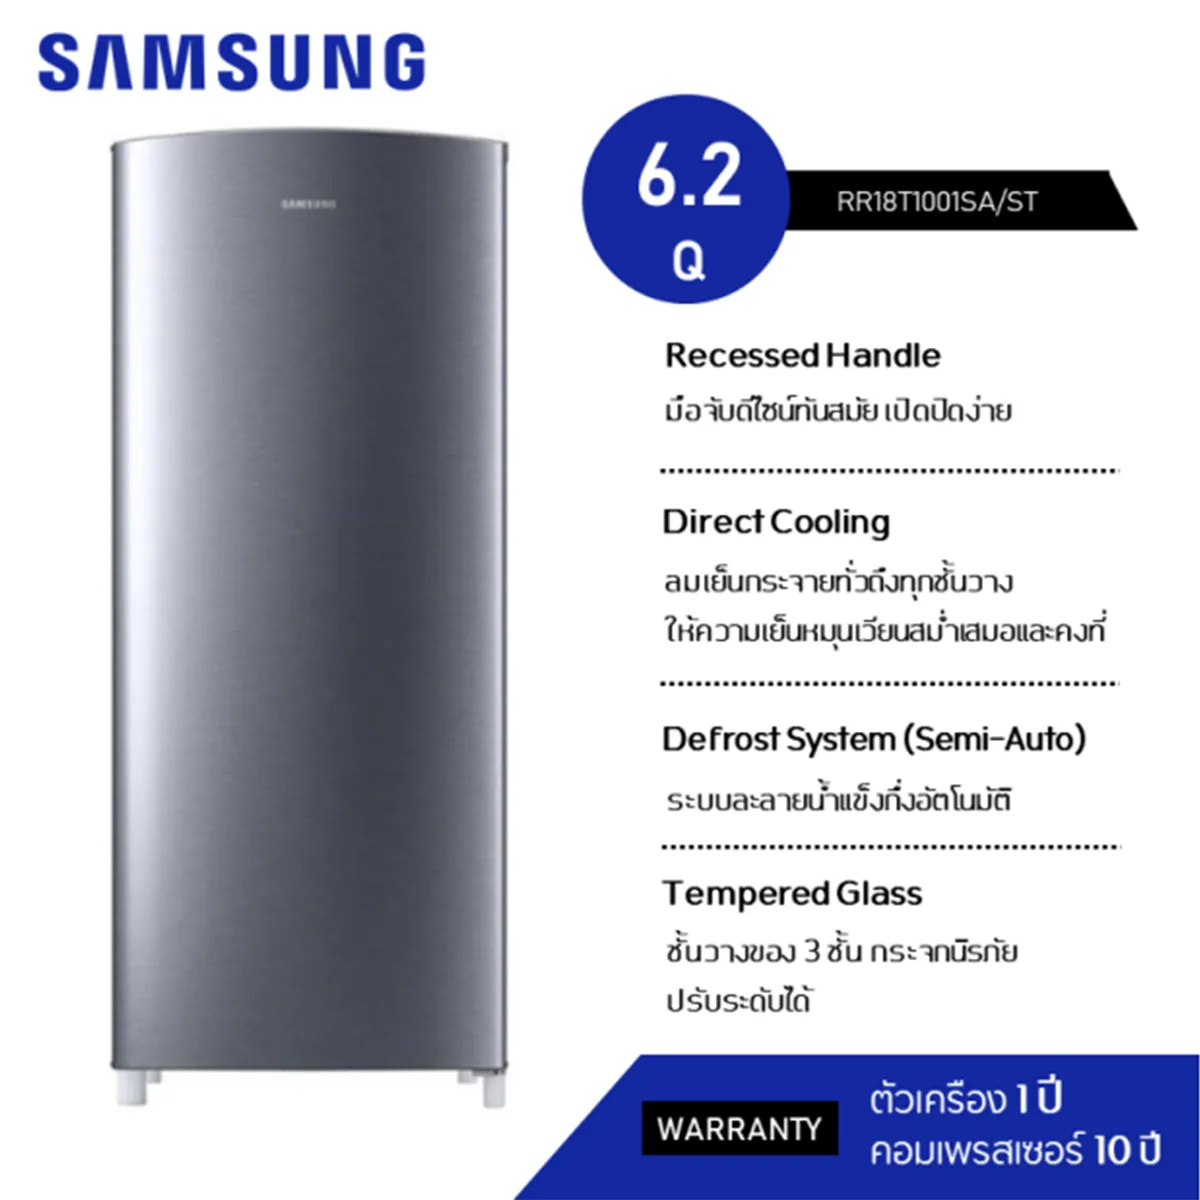 SAMSUNG ตู้เย็น 1 ประตู ความจุ 6.2 คิว รุ่น RR18T1001SA/ST mini bar ใหญ่ แช่แข็งได้ ราคาถูก ของแท้ มาใหม่ เก็บ ของสด ผลไม้ เนื้อ ผัก อาหารสด